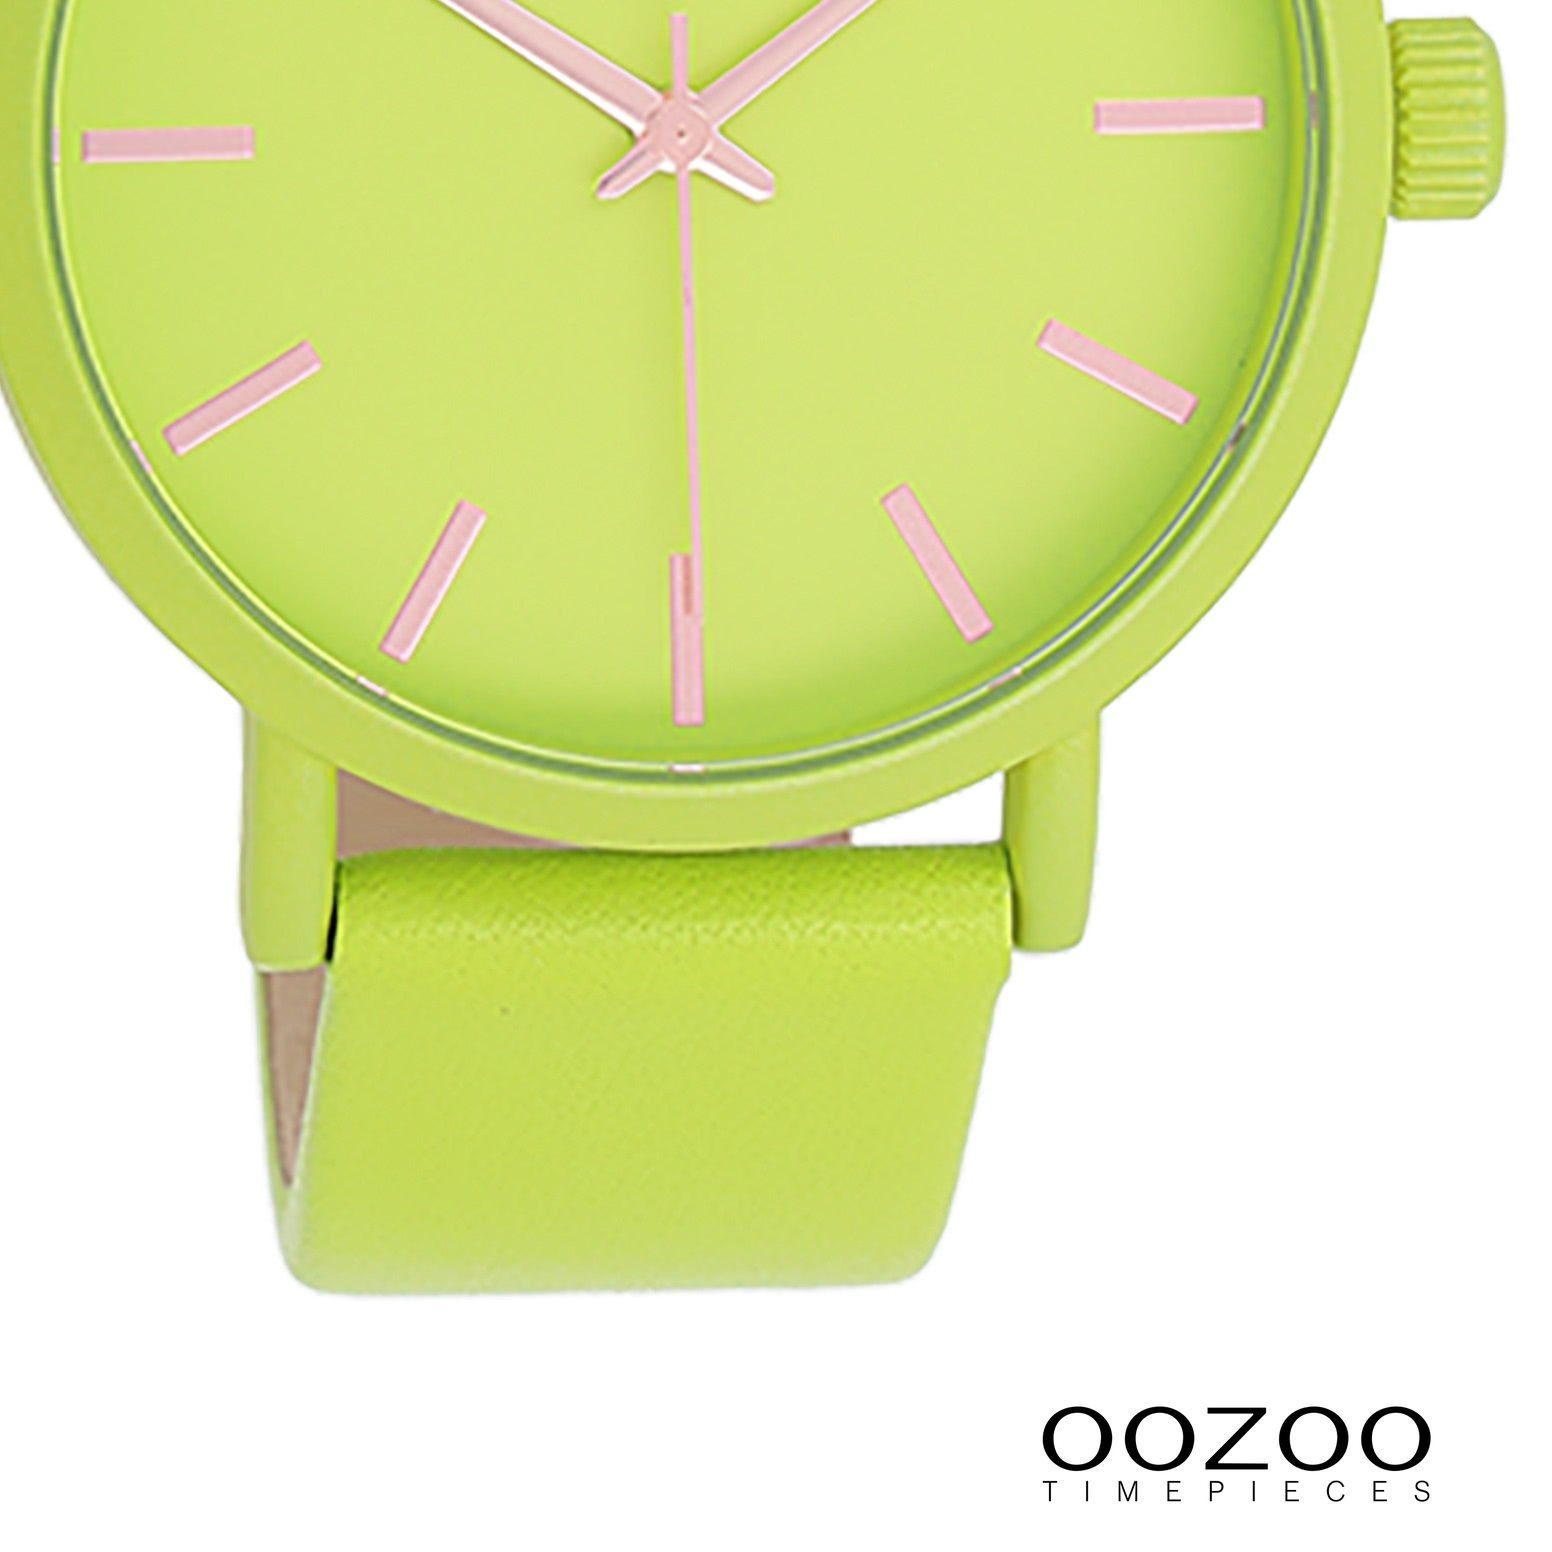 Damen Oozoo Fashion-Style Analog, Timepieces Quarzuhr OOZOO 42mm) groß Armbanduhr (ca. Lederarmband, rund, Damenuhr